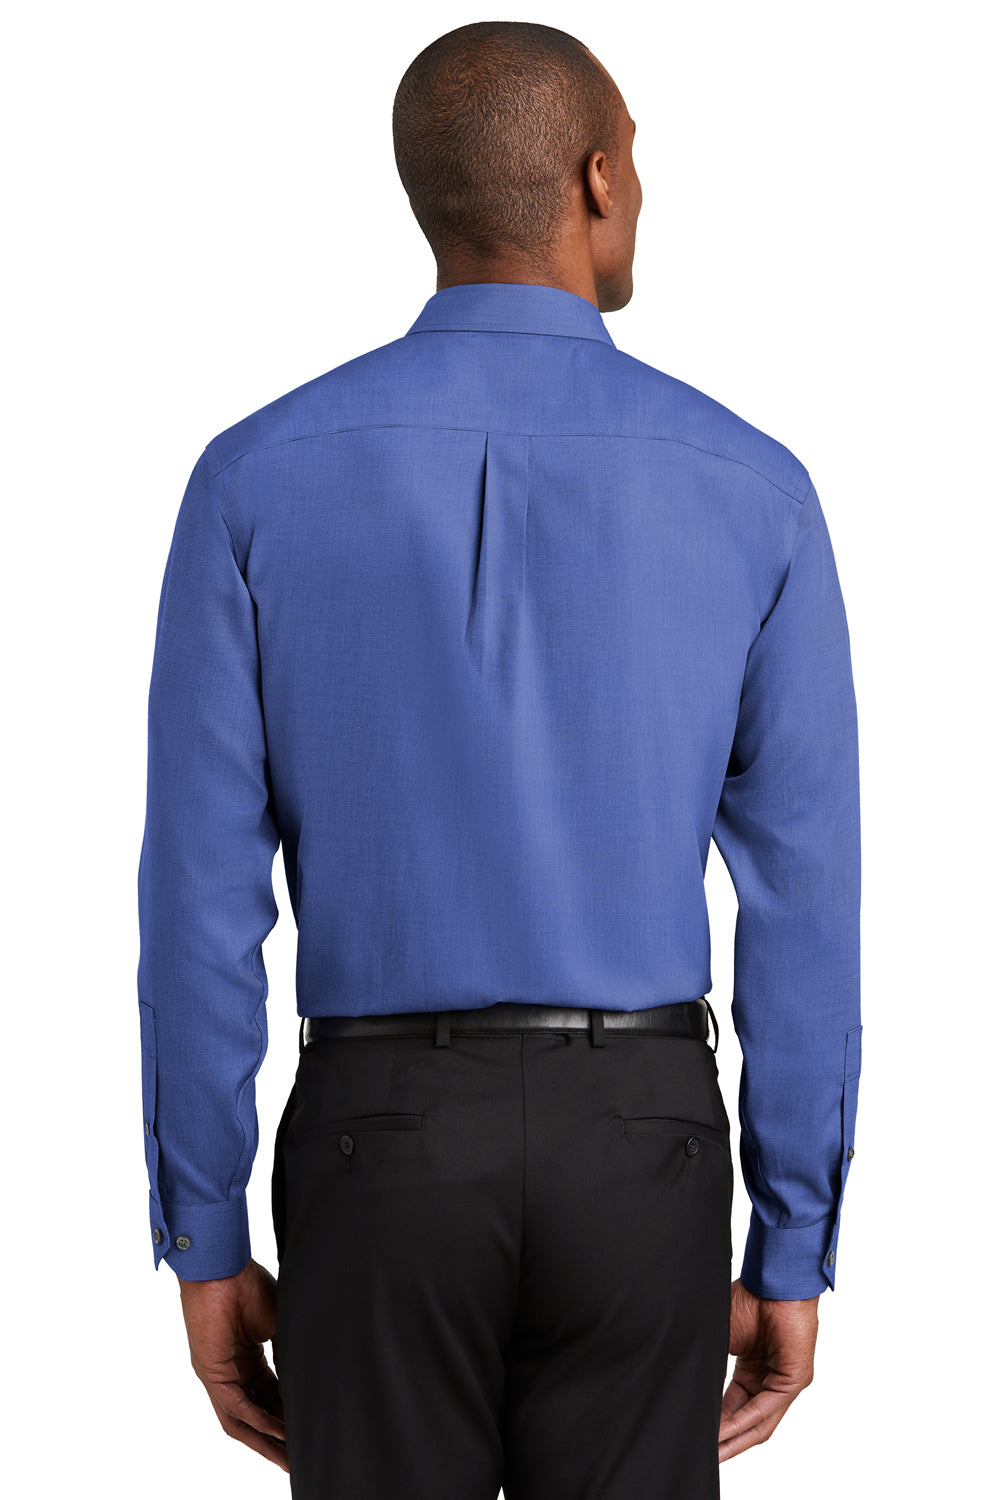 Red House RH370 Mens Nailhead Wrinkle Resistant Long Sleeve Button Down Shirt w/ Pocket Mediterranean Blue Back